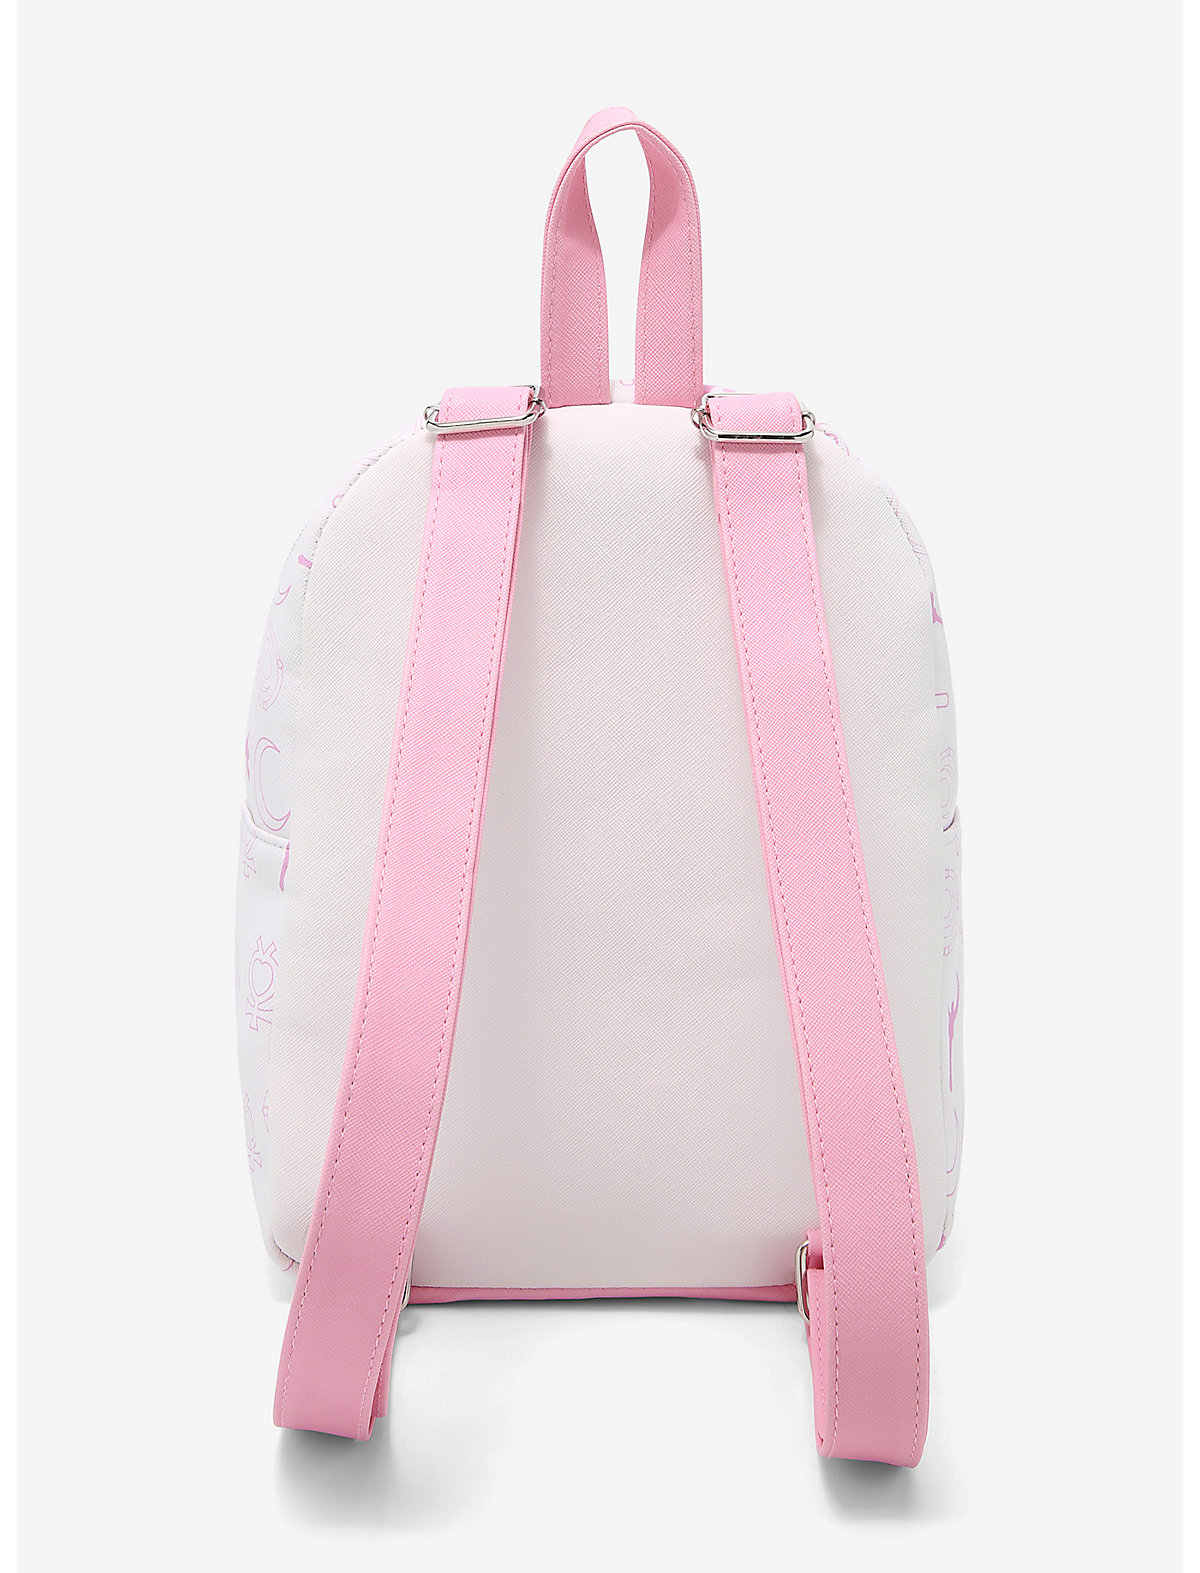 Neon Carnival Stargazer Mini Convertible Backpack: Laser Pink – LOLA  Backpacks